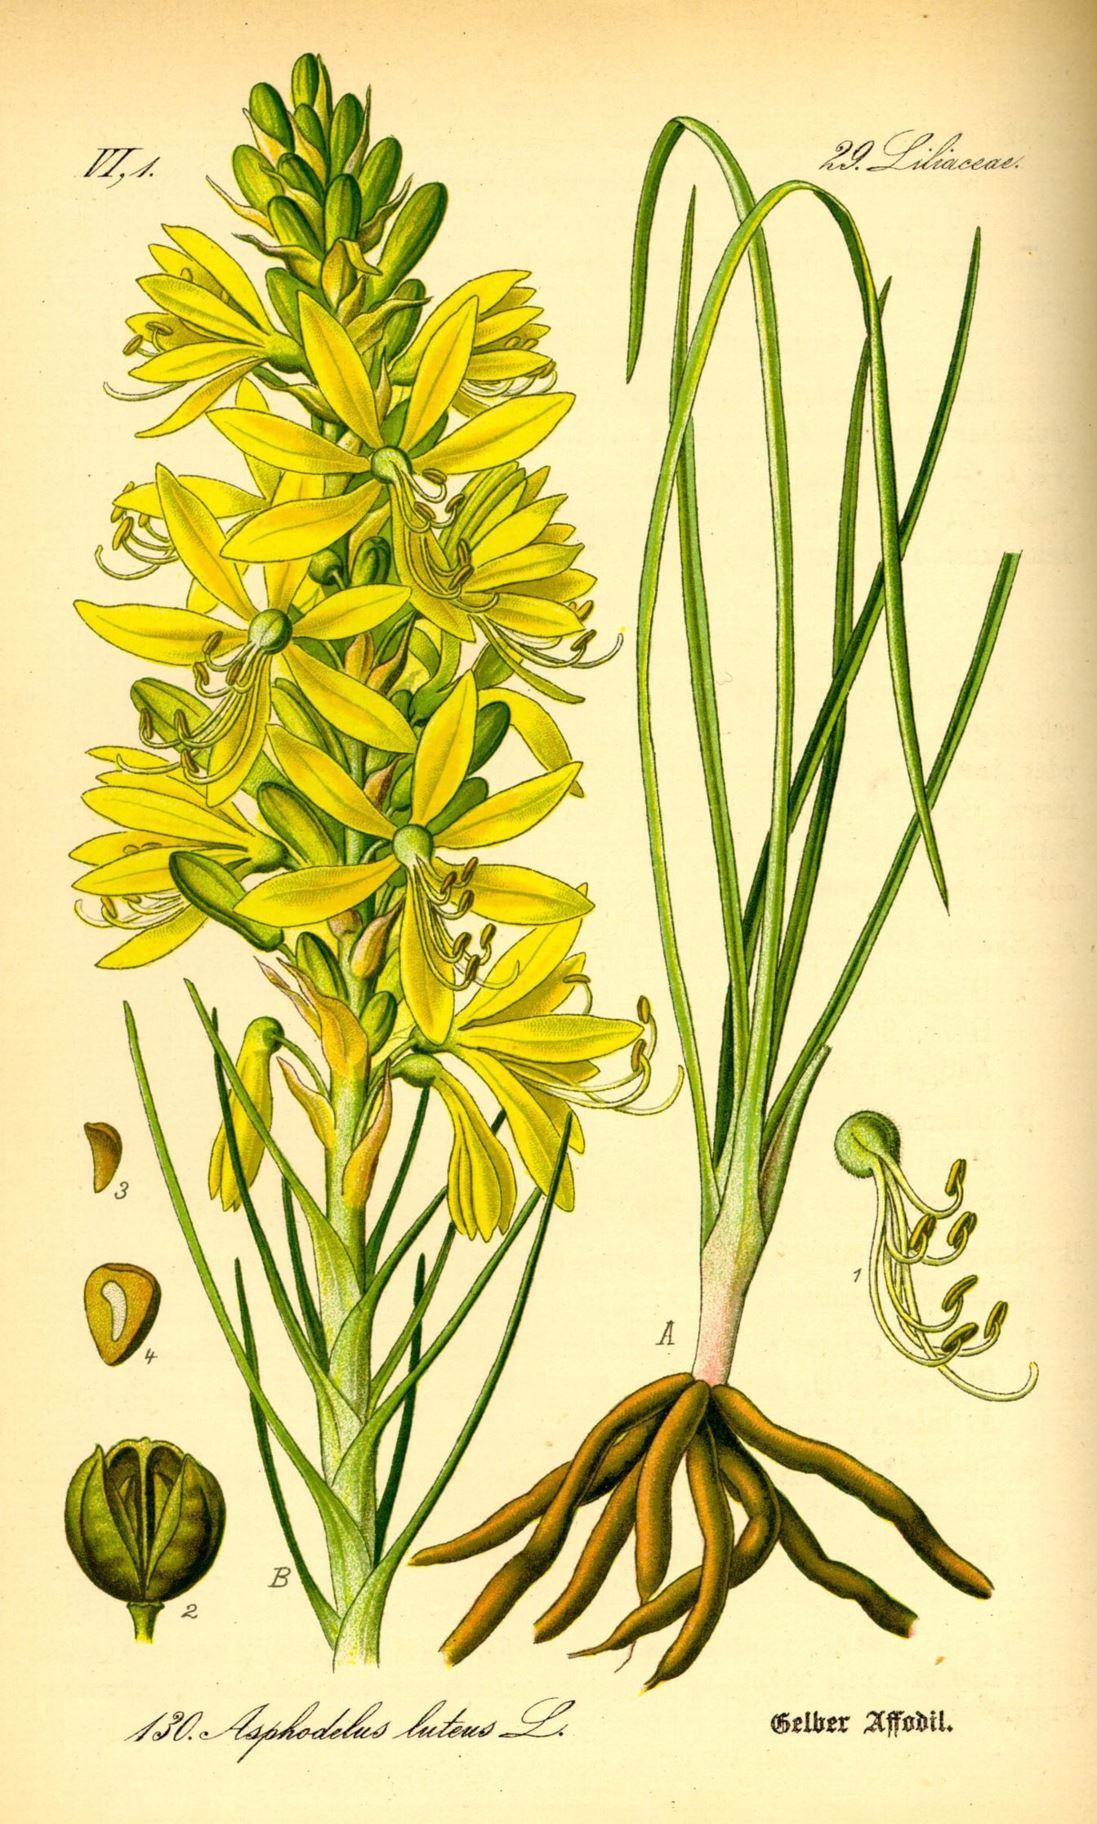 Asphodeline lutea - Gele affodil, yellow asphodel, Jacob's rod